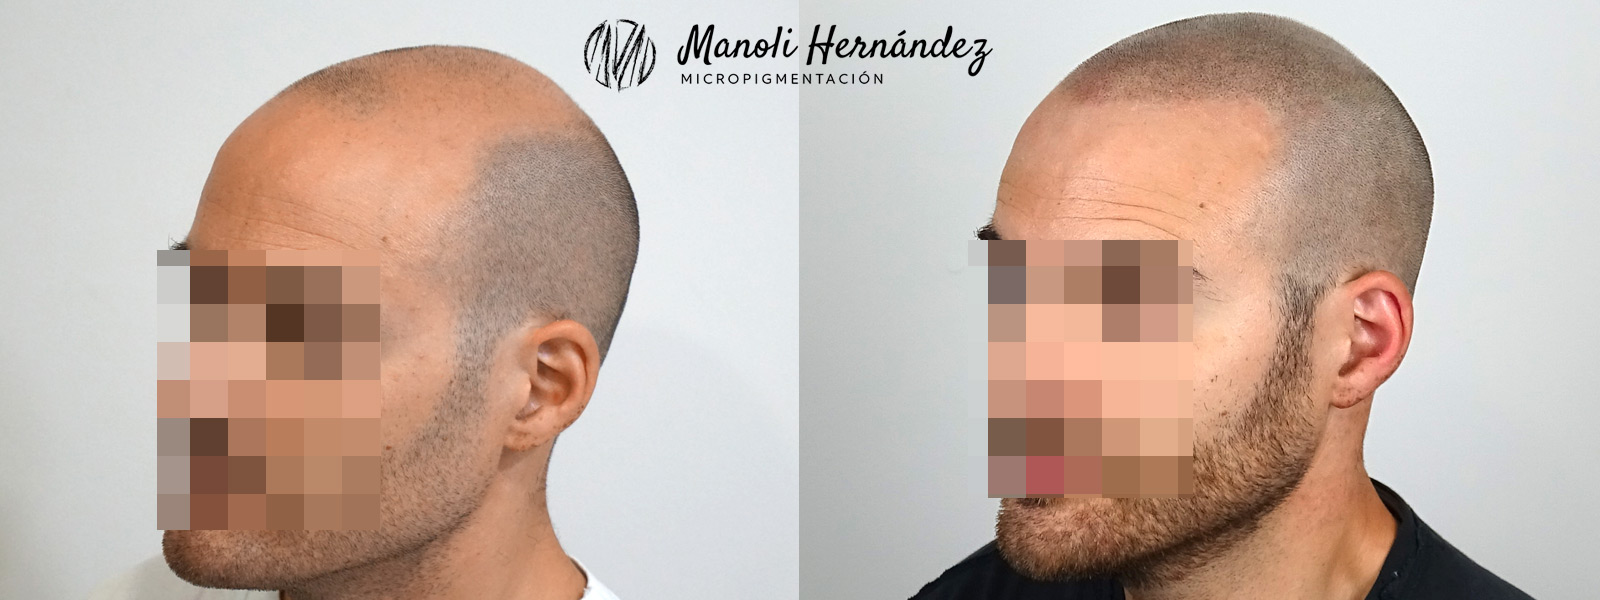 Tratamiento de micropigmentación capilar para tratar alopecia